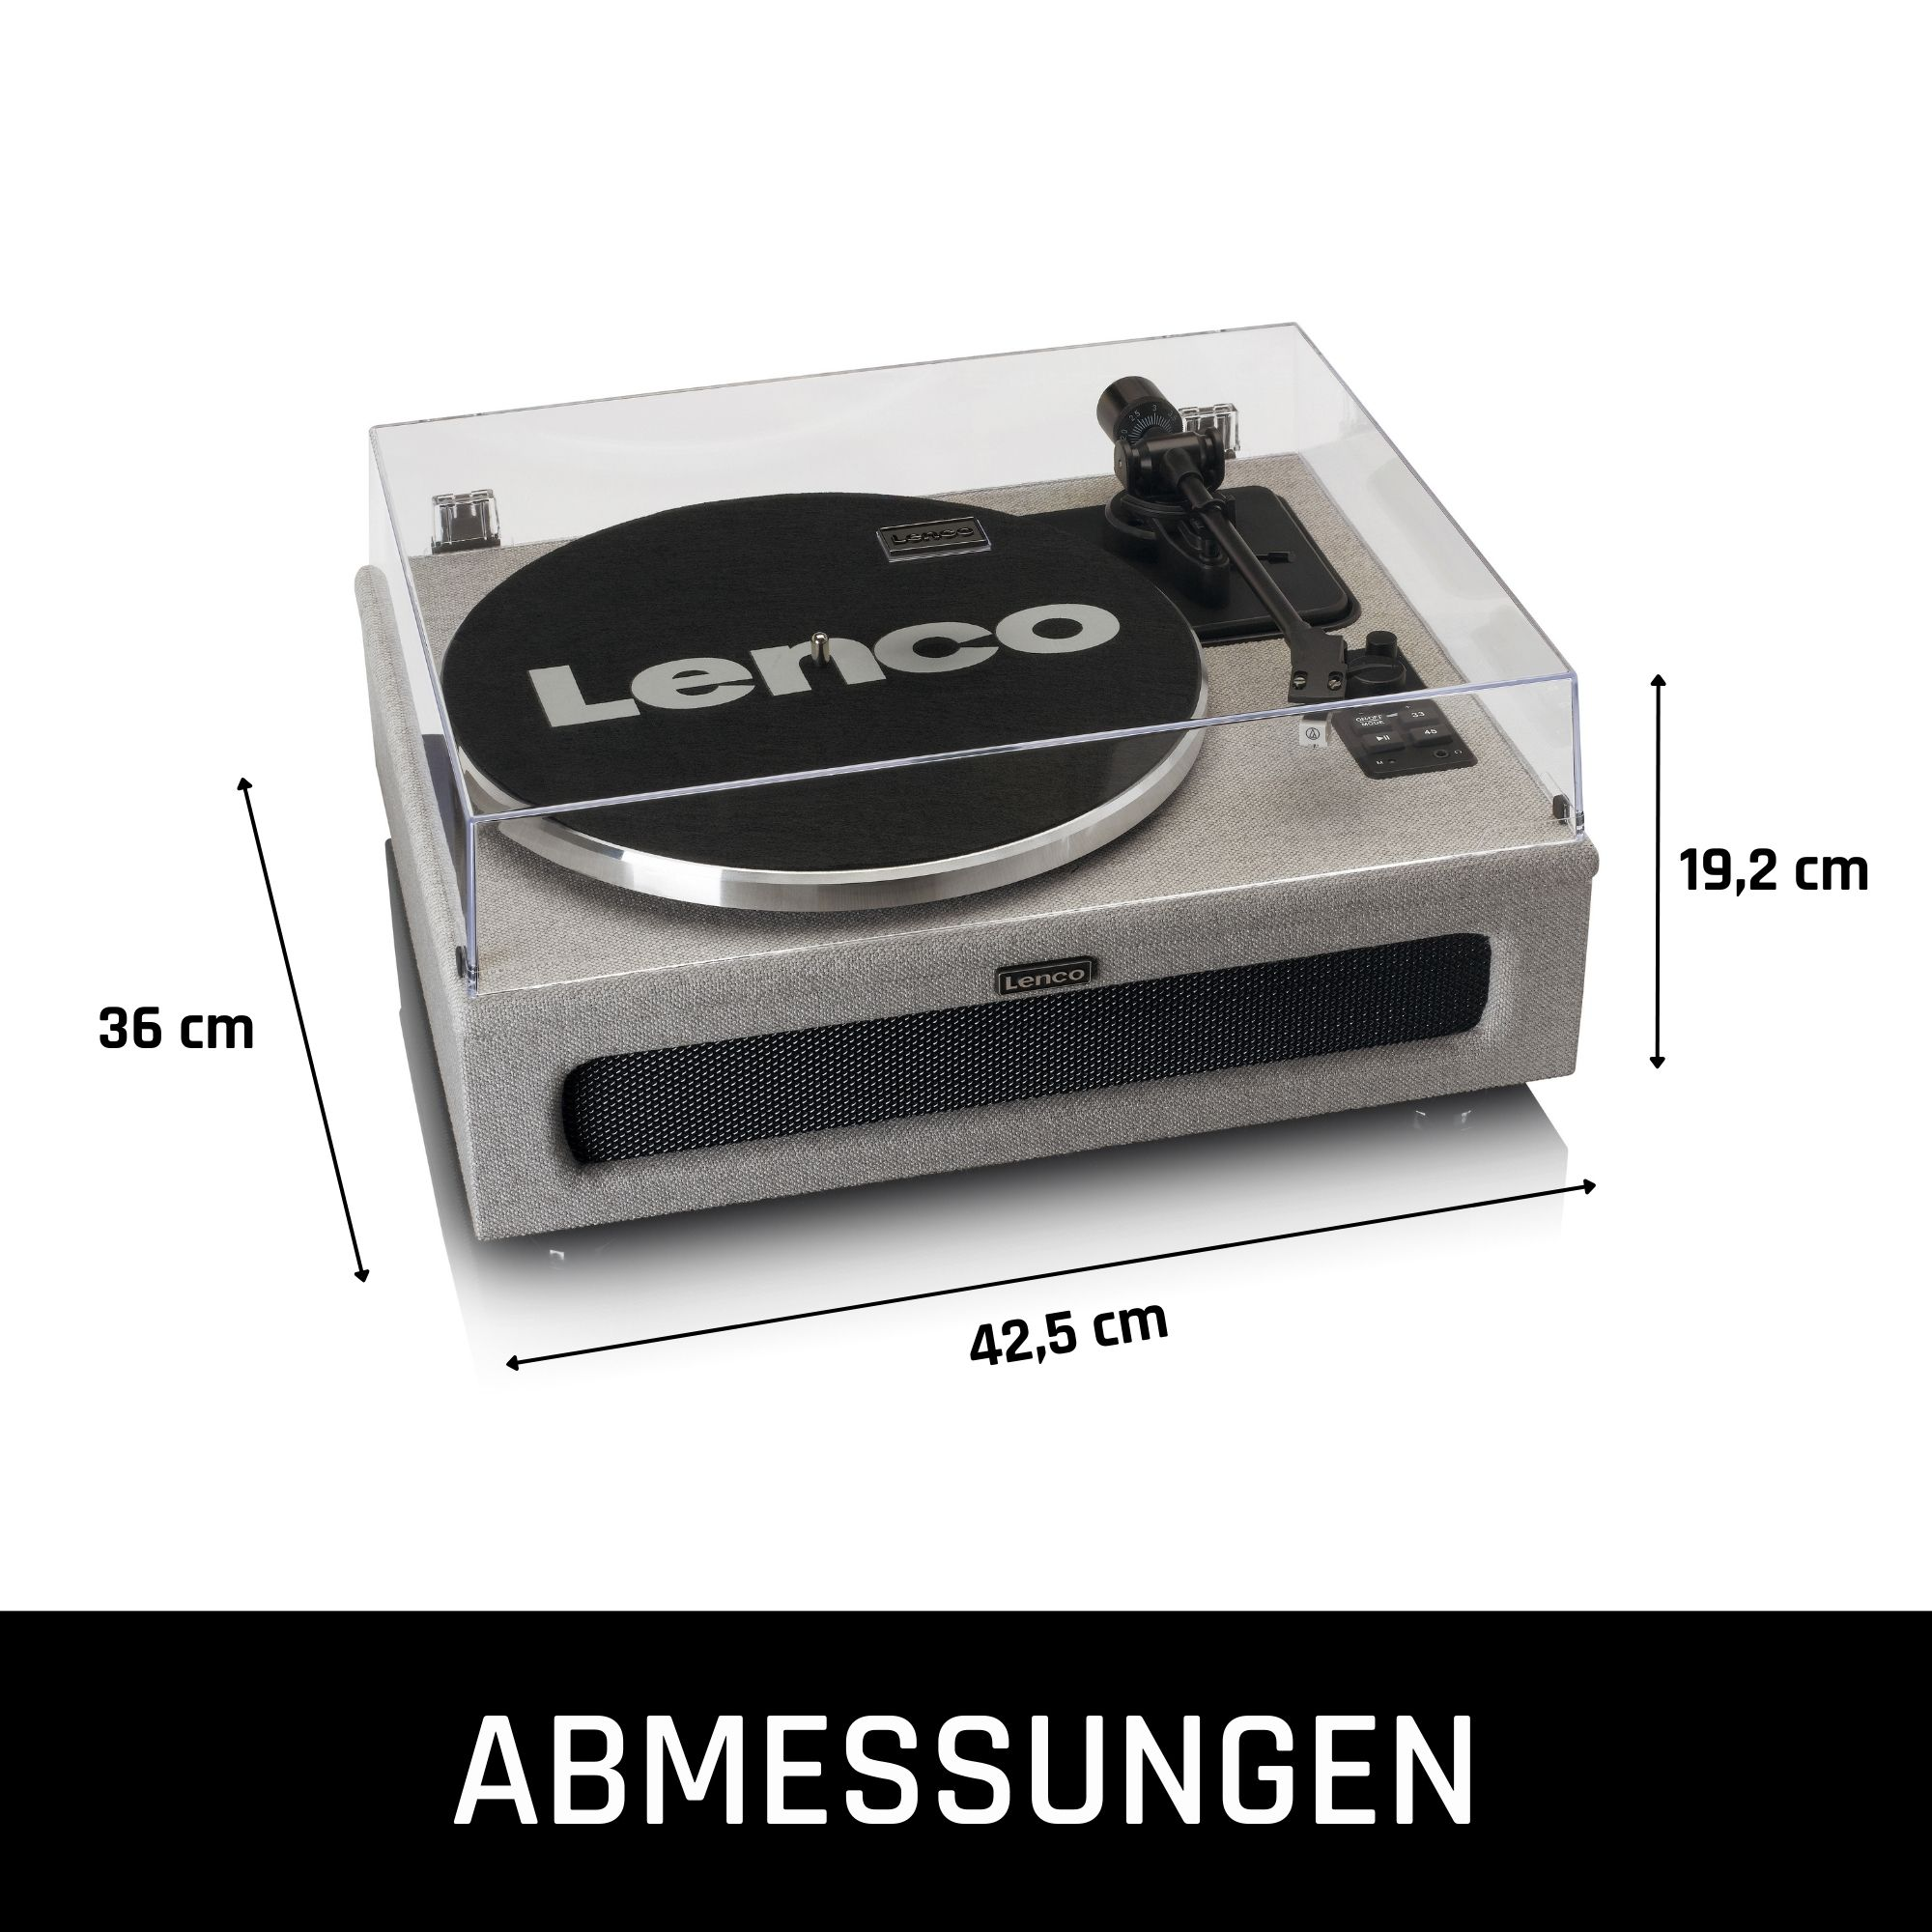 LENCO LS-440GY - eingebaute 4 Grau Plattenspieler Lautsprecher 